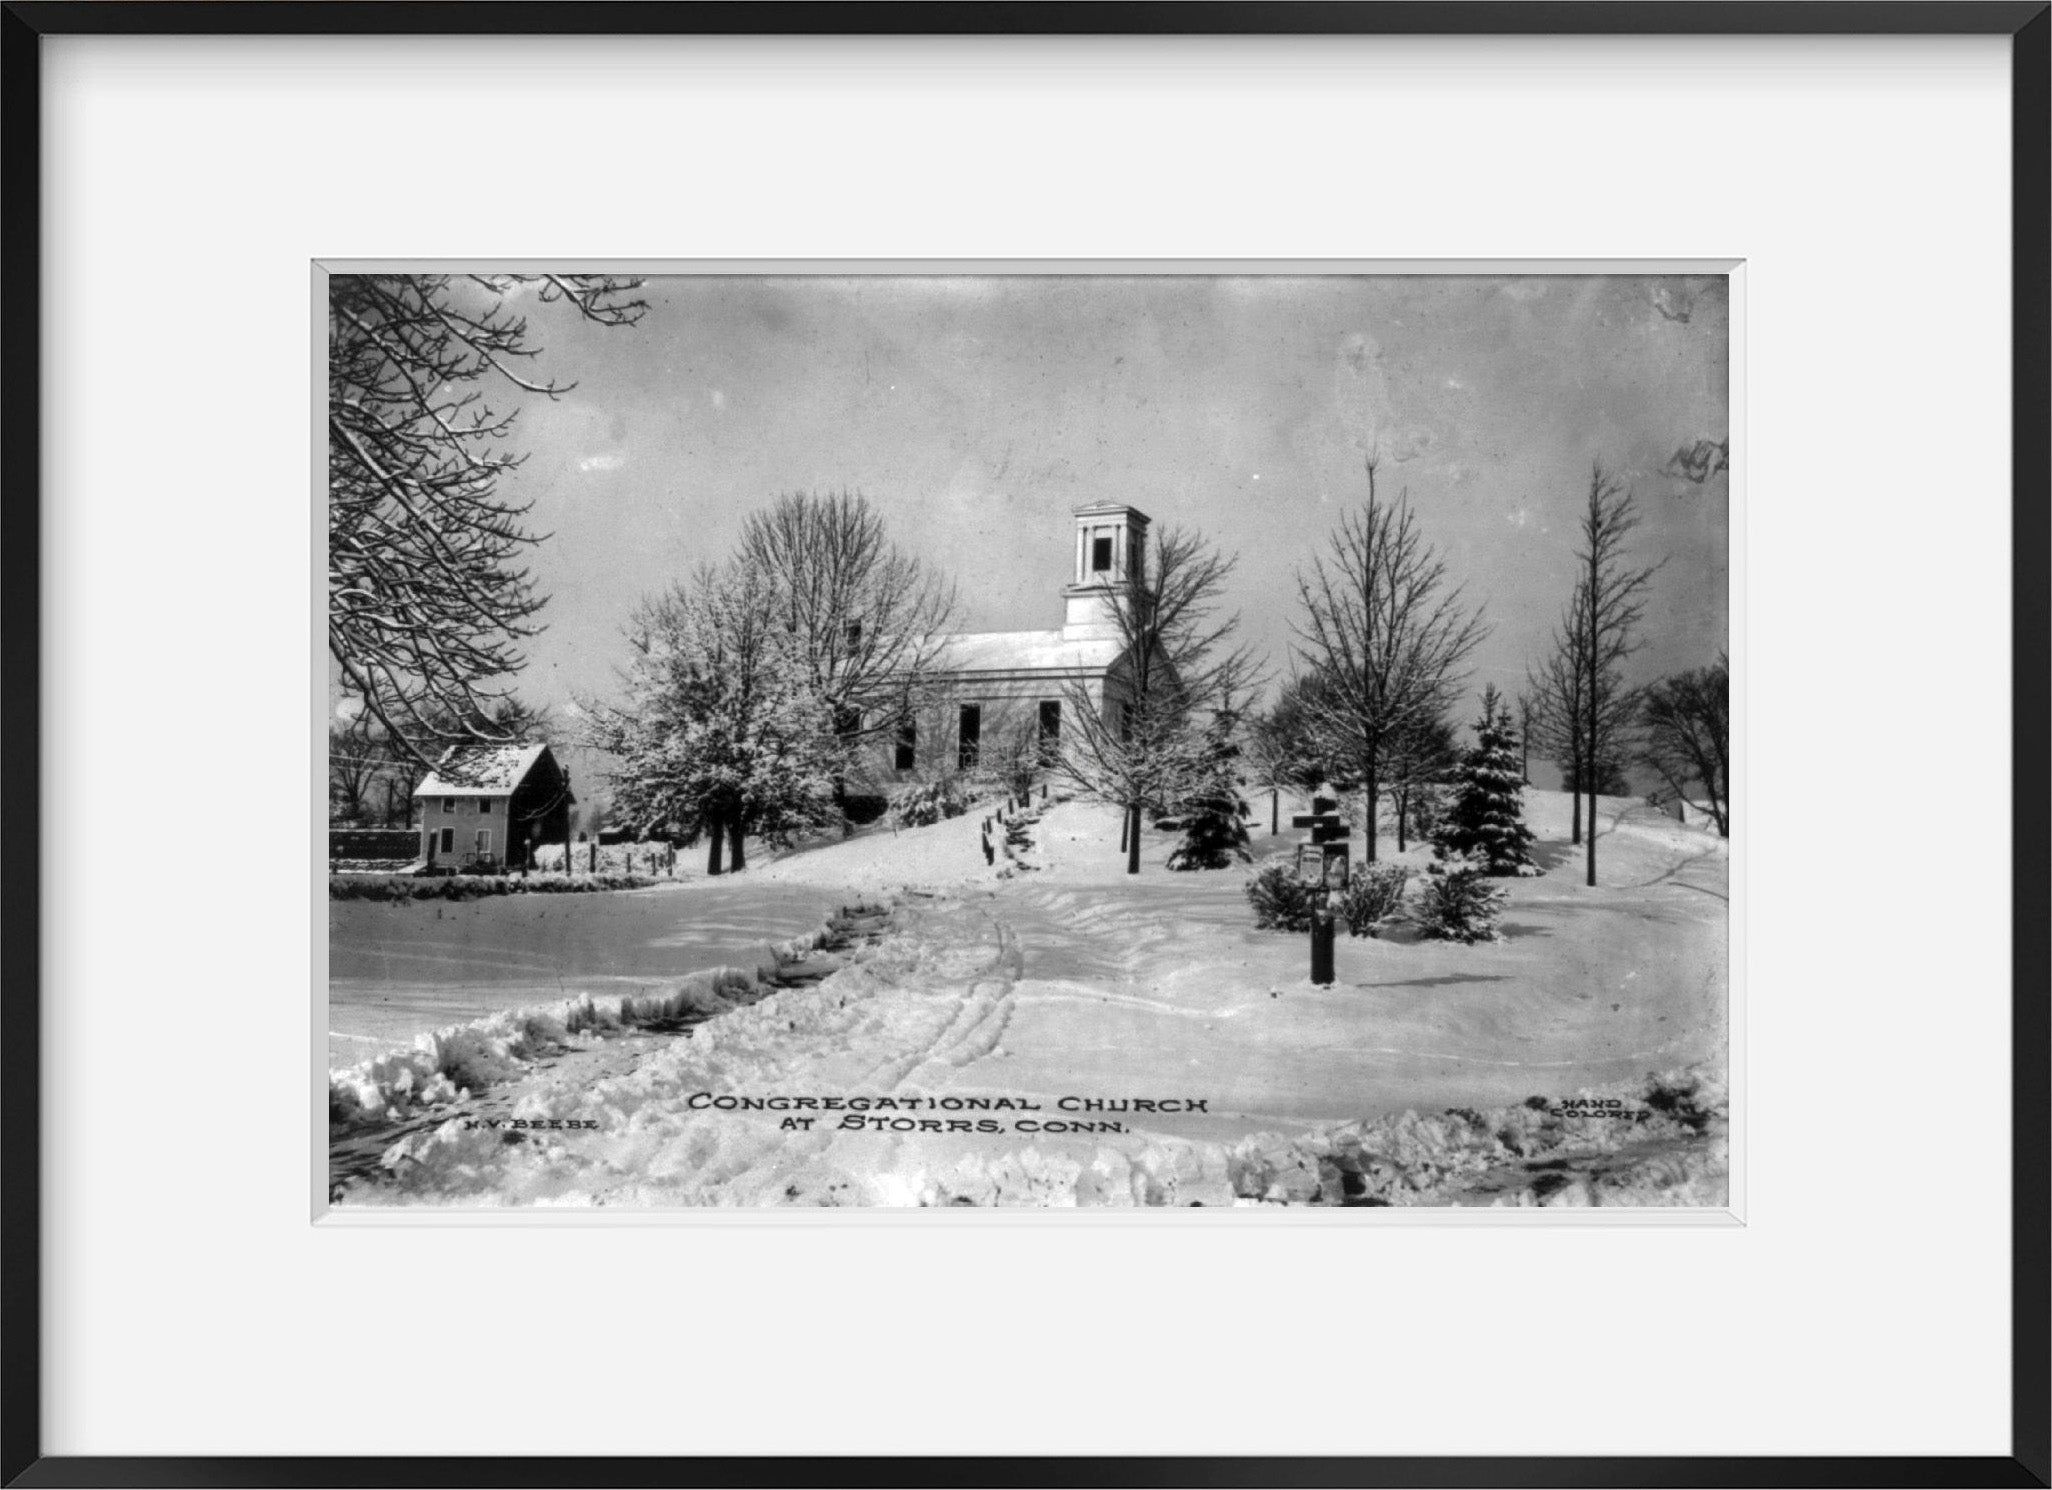 Photograph of Congregational Church at Storrs, Conn.